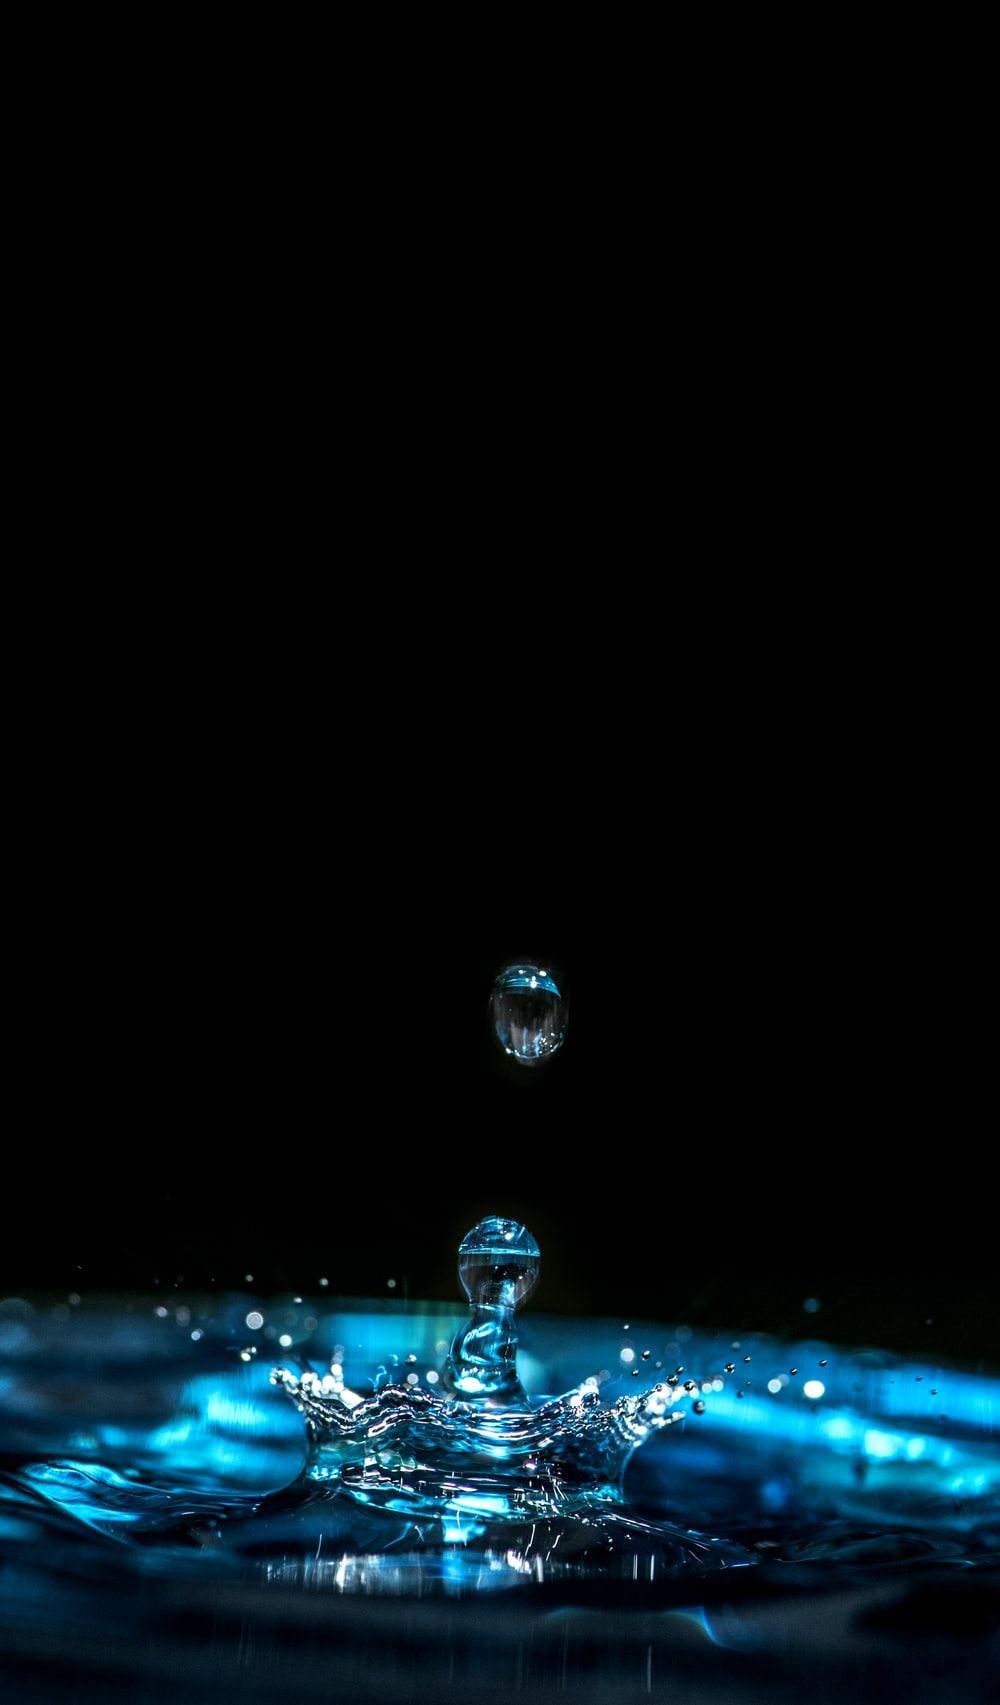 Water Splash Picture [HD]. Download Free Image